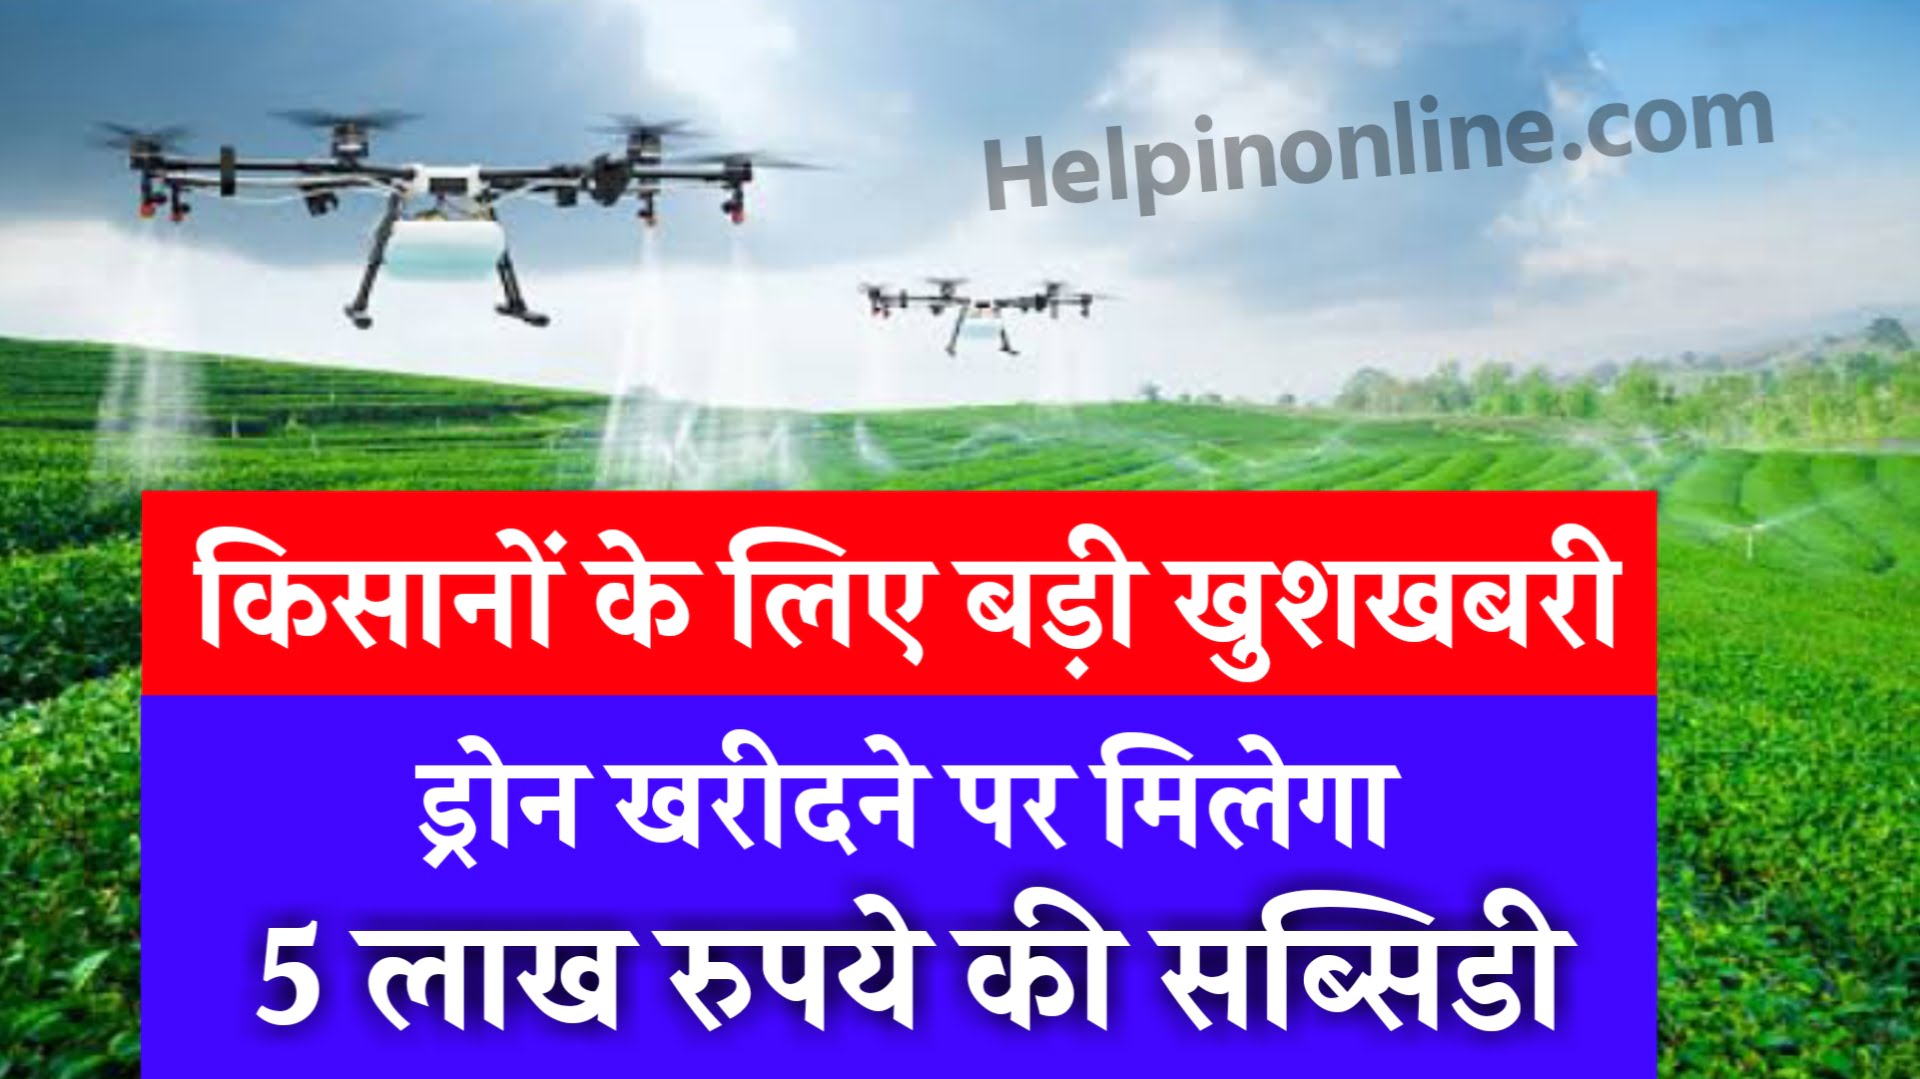 kisan drone subsidy yojana 2023 || drone subsidy apply online || kisan drones || drone subsidy yojana || sarkari yojana latest news || drone subsidy in hindi || small drone price || drone subsidy for farmers || agriculture drone subsidy apply online || kisan drone scheme